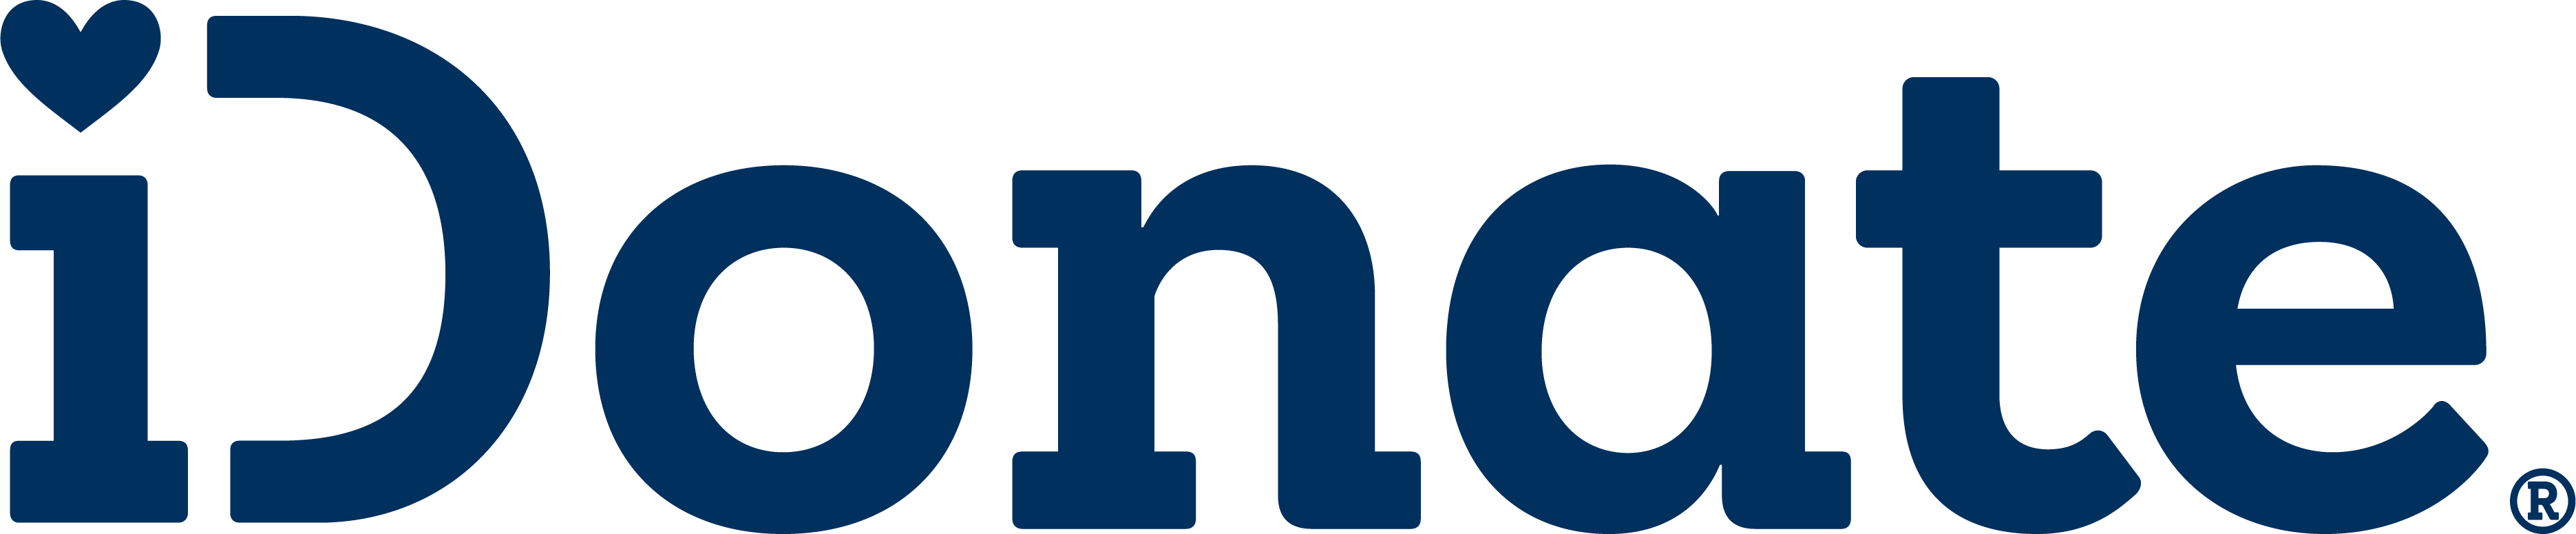 iDonate logo_solid navy blue